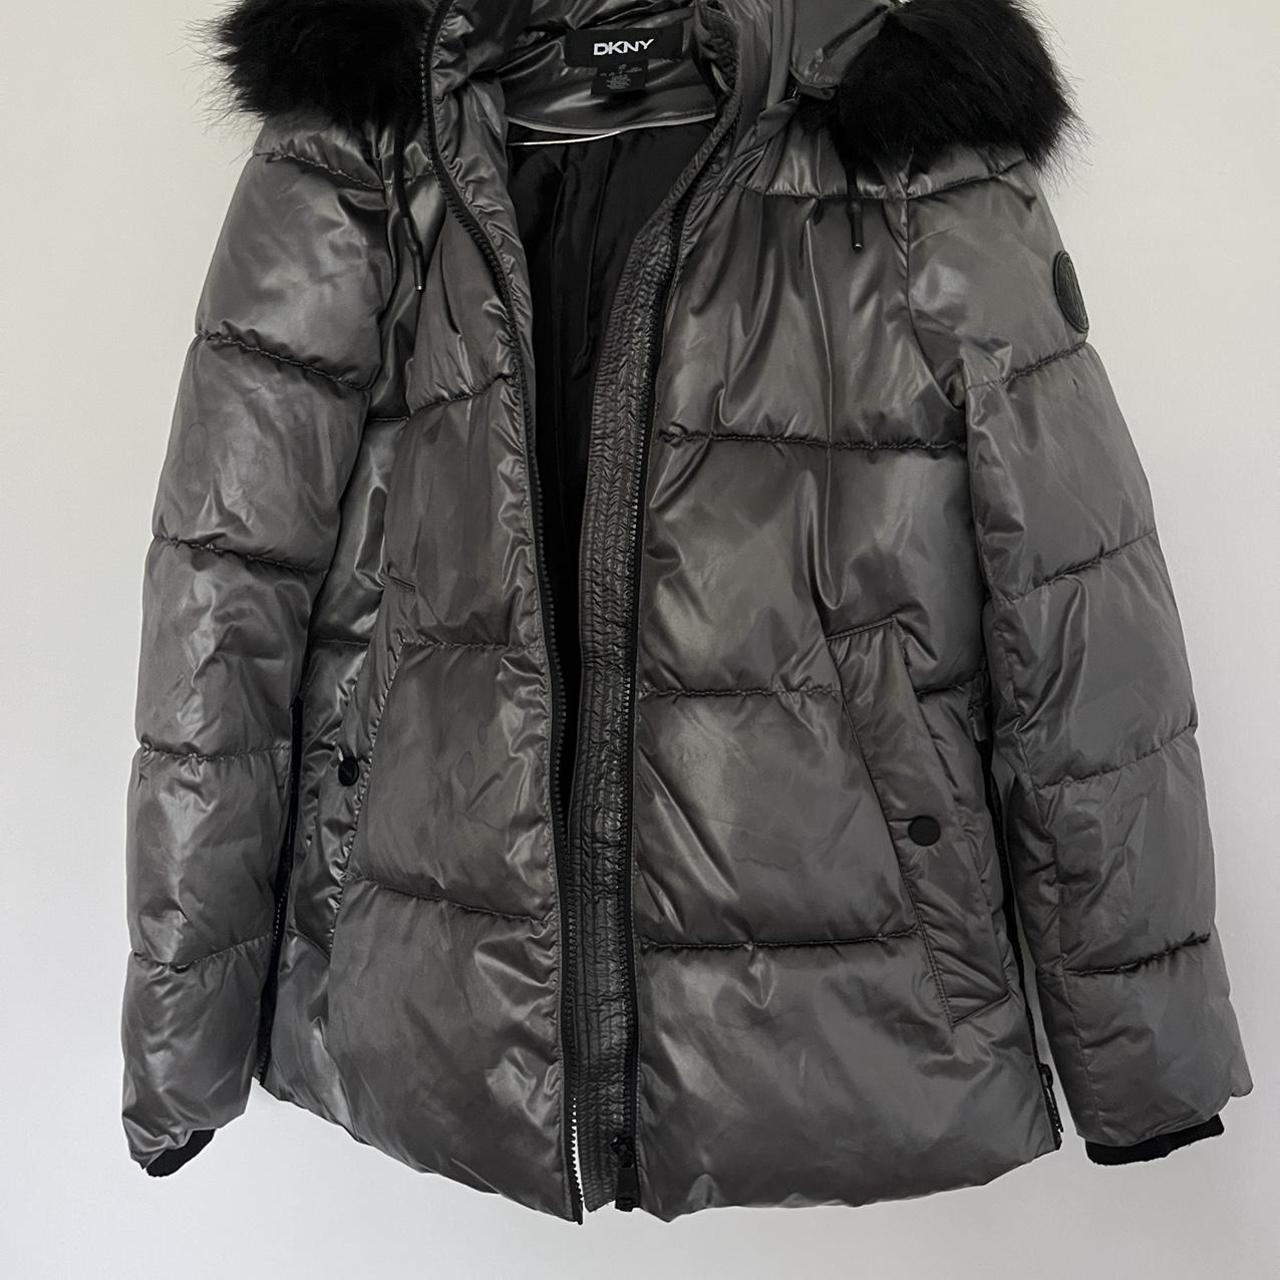 DKNY Women's Silver and Black Coat | Depop